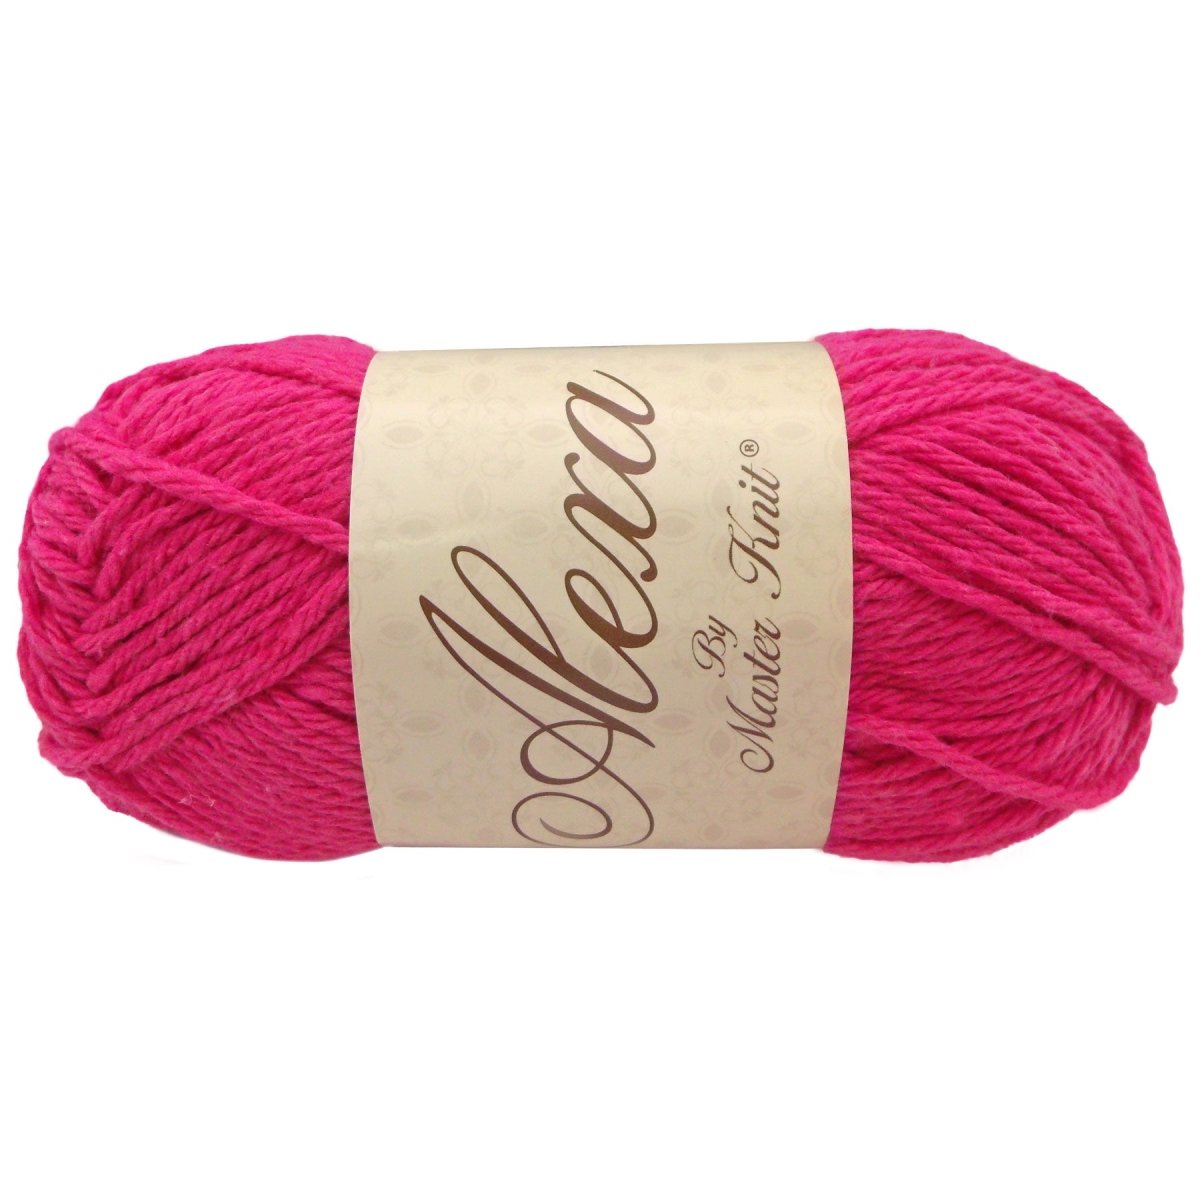 ALEXA - Crochetstores9340-792